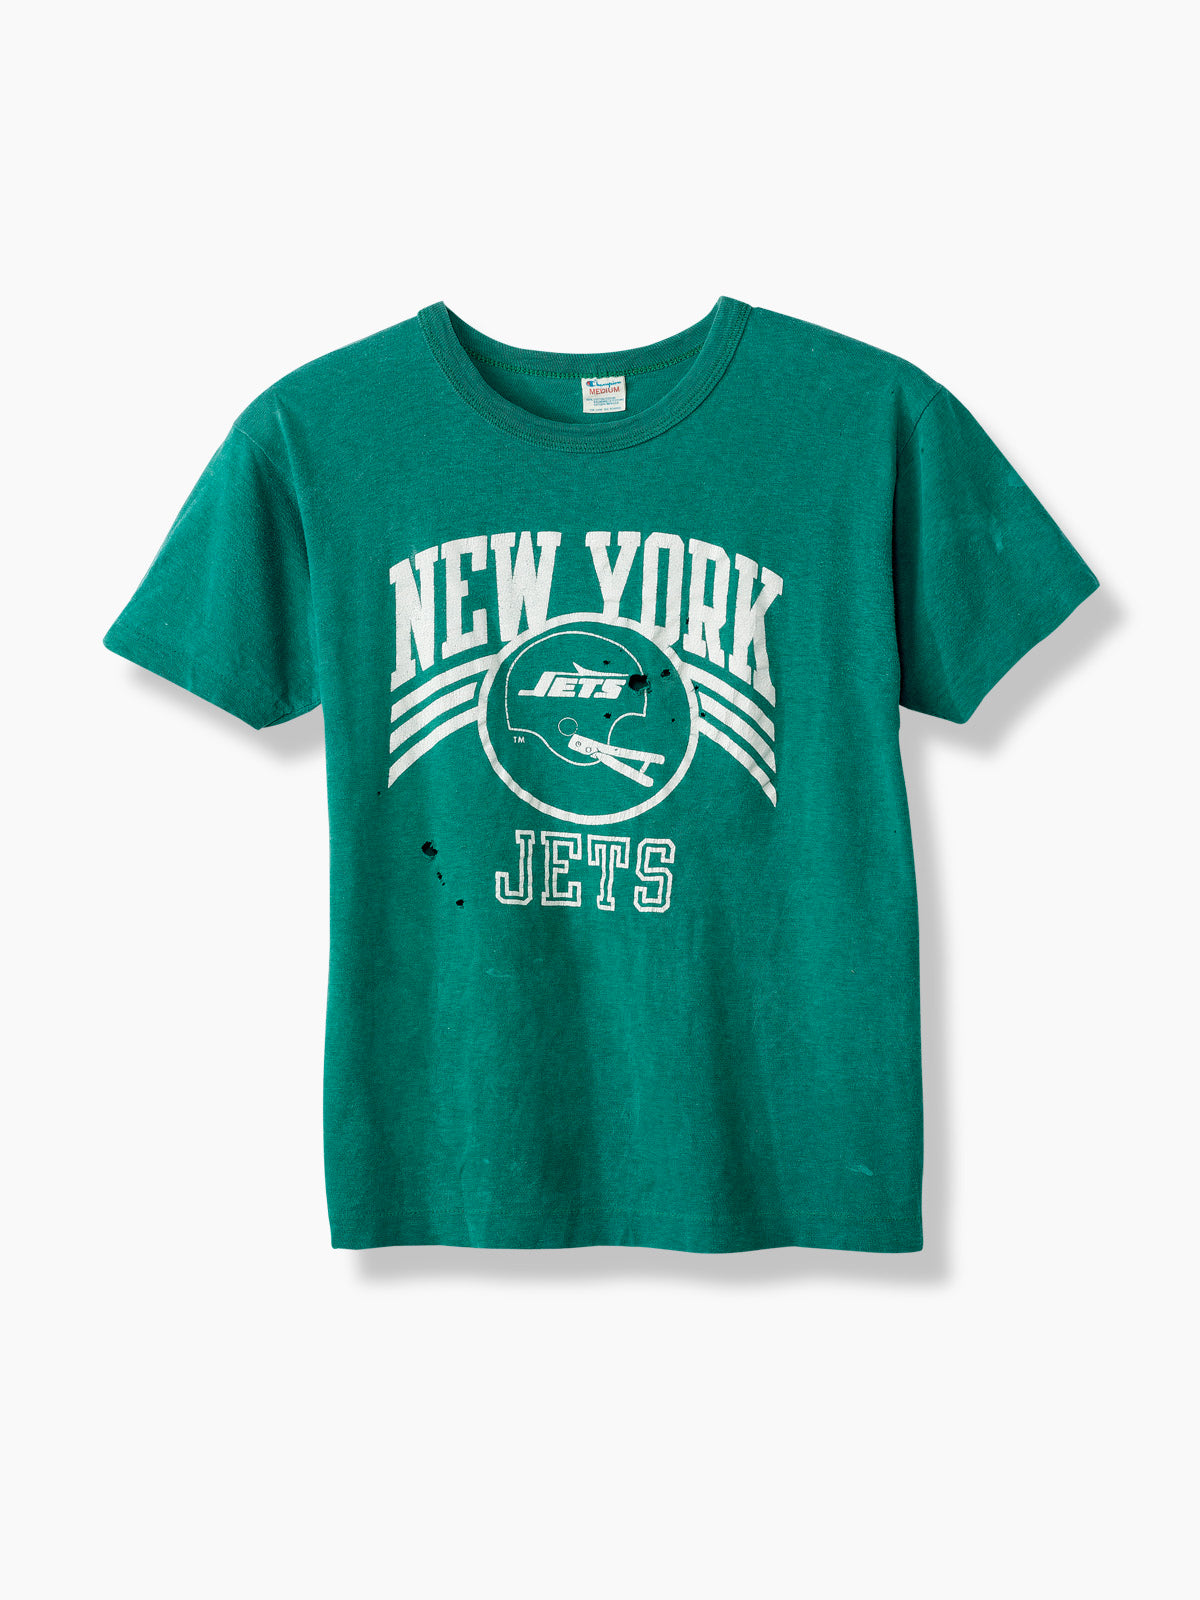 vintage new york jets shirt